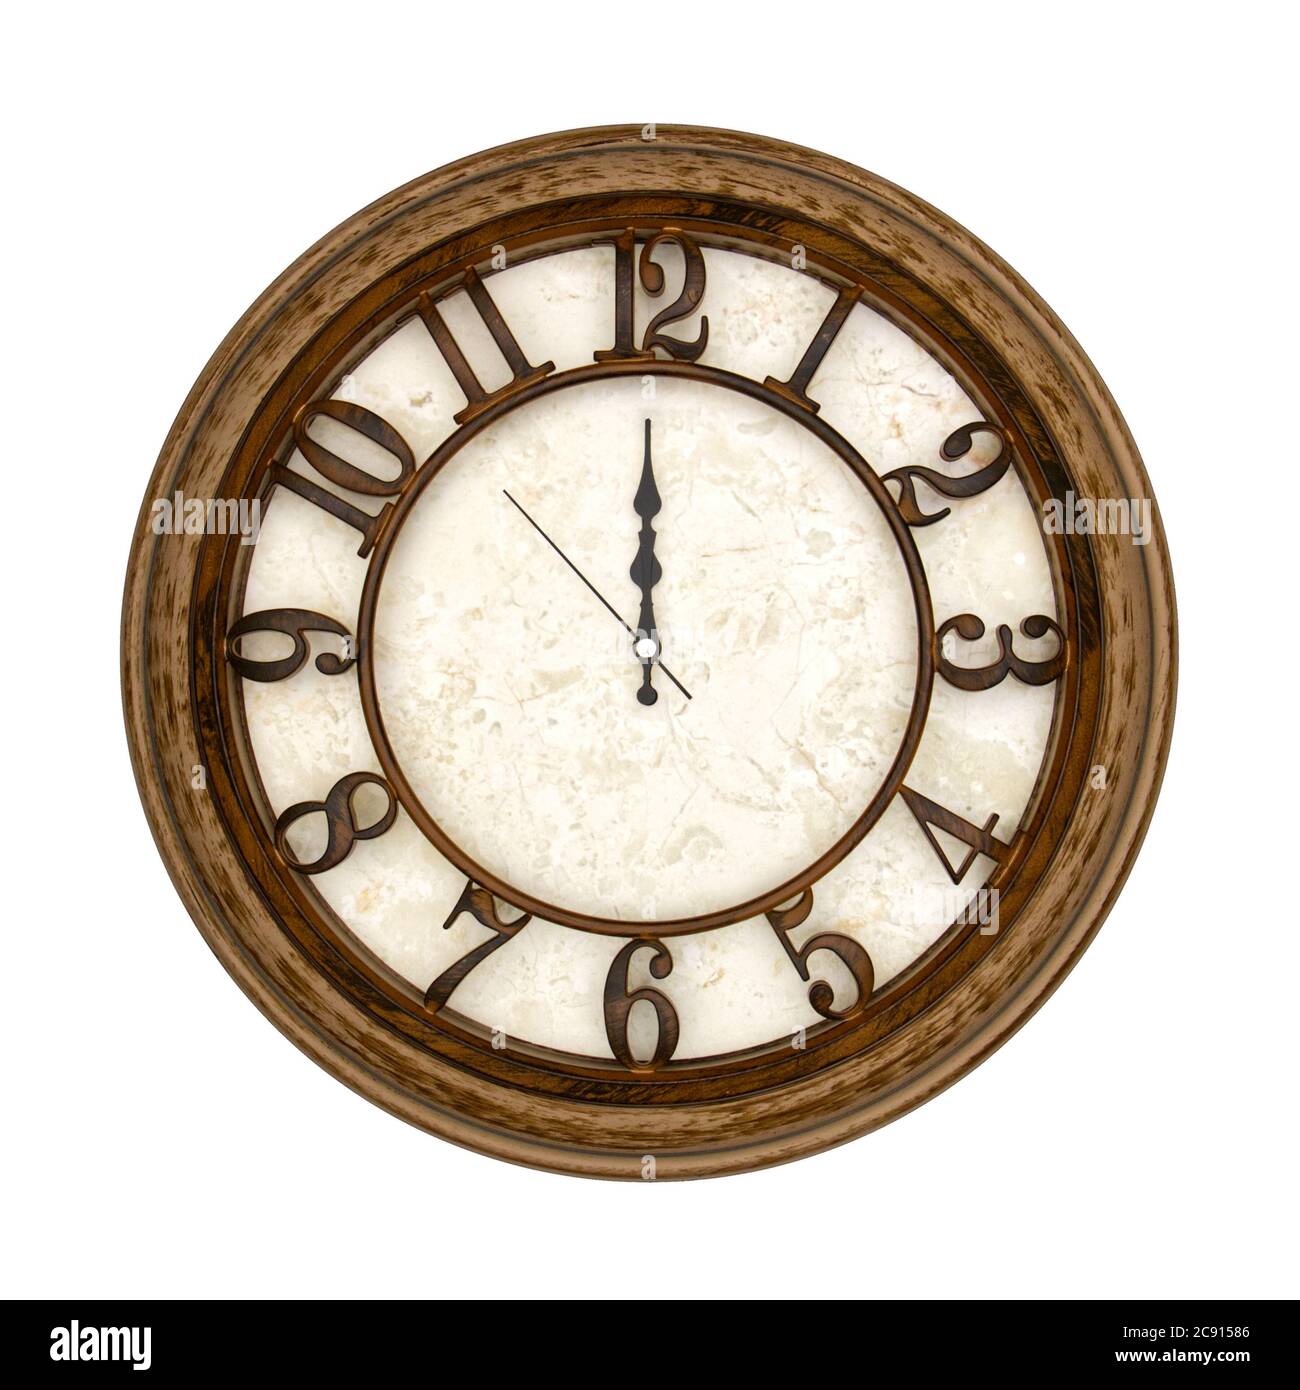 Wooden round analog wall clock isolated on white background, its twelve oclock. Stock Photo